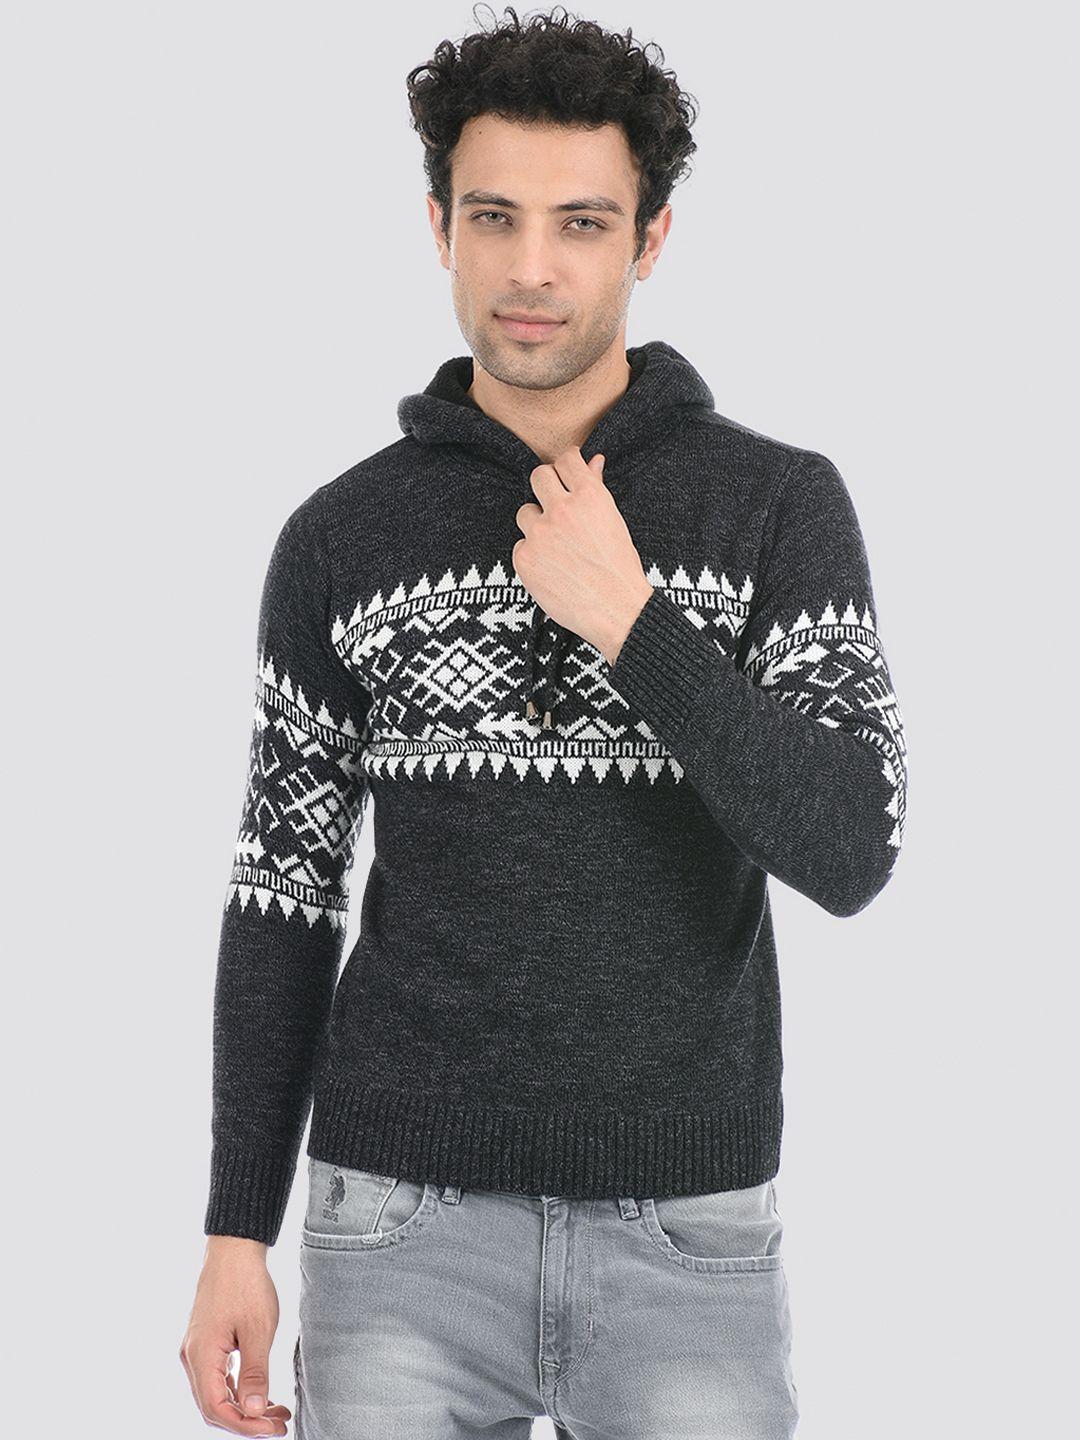 cloak-&-decker-by-monte-carlo-men-grey-&-white-printed-acrylic-pullover-sweater